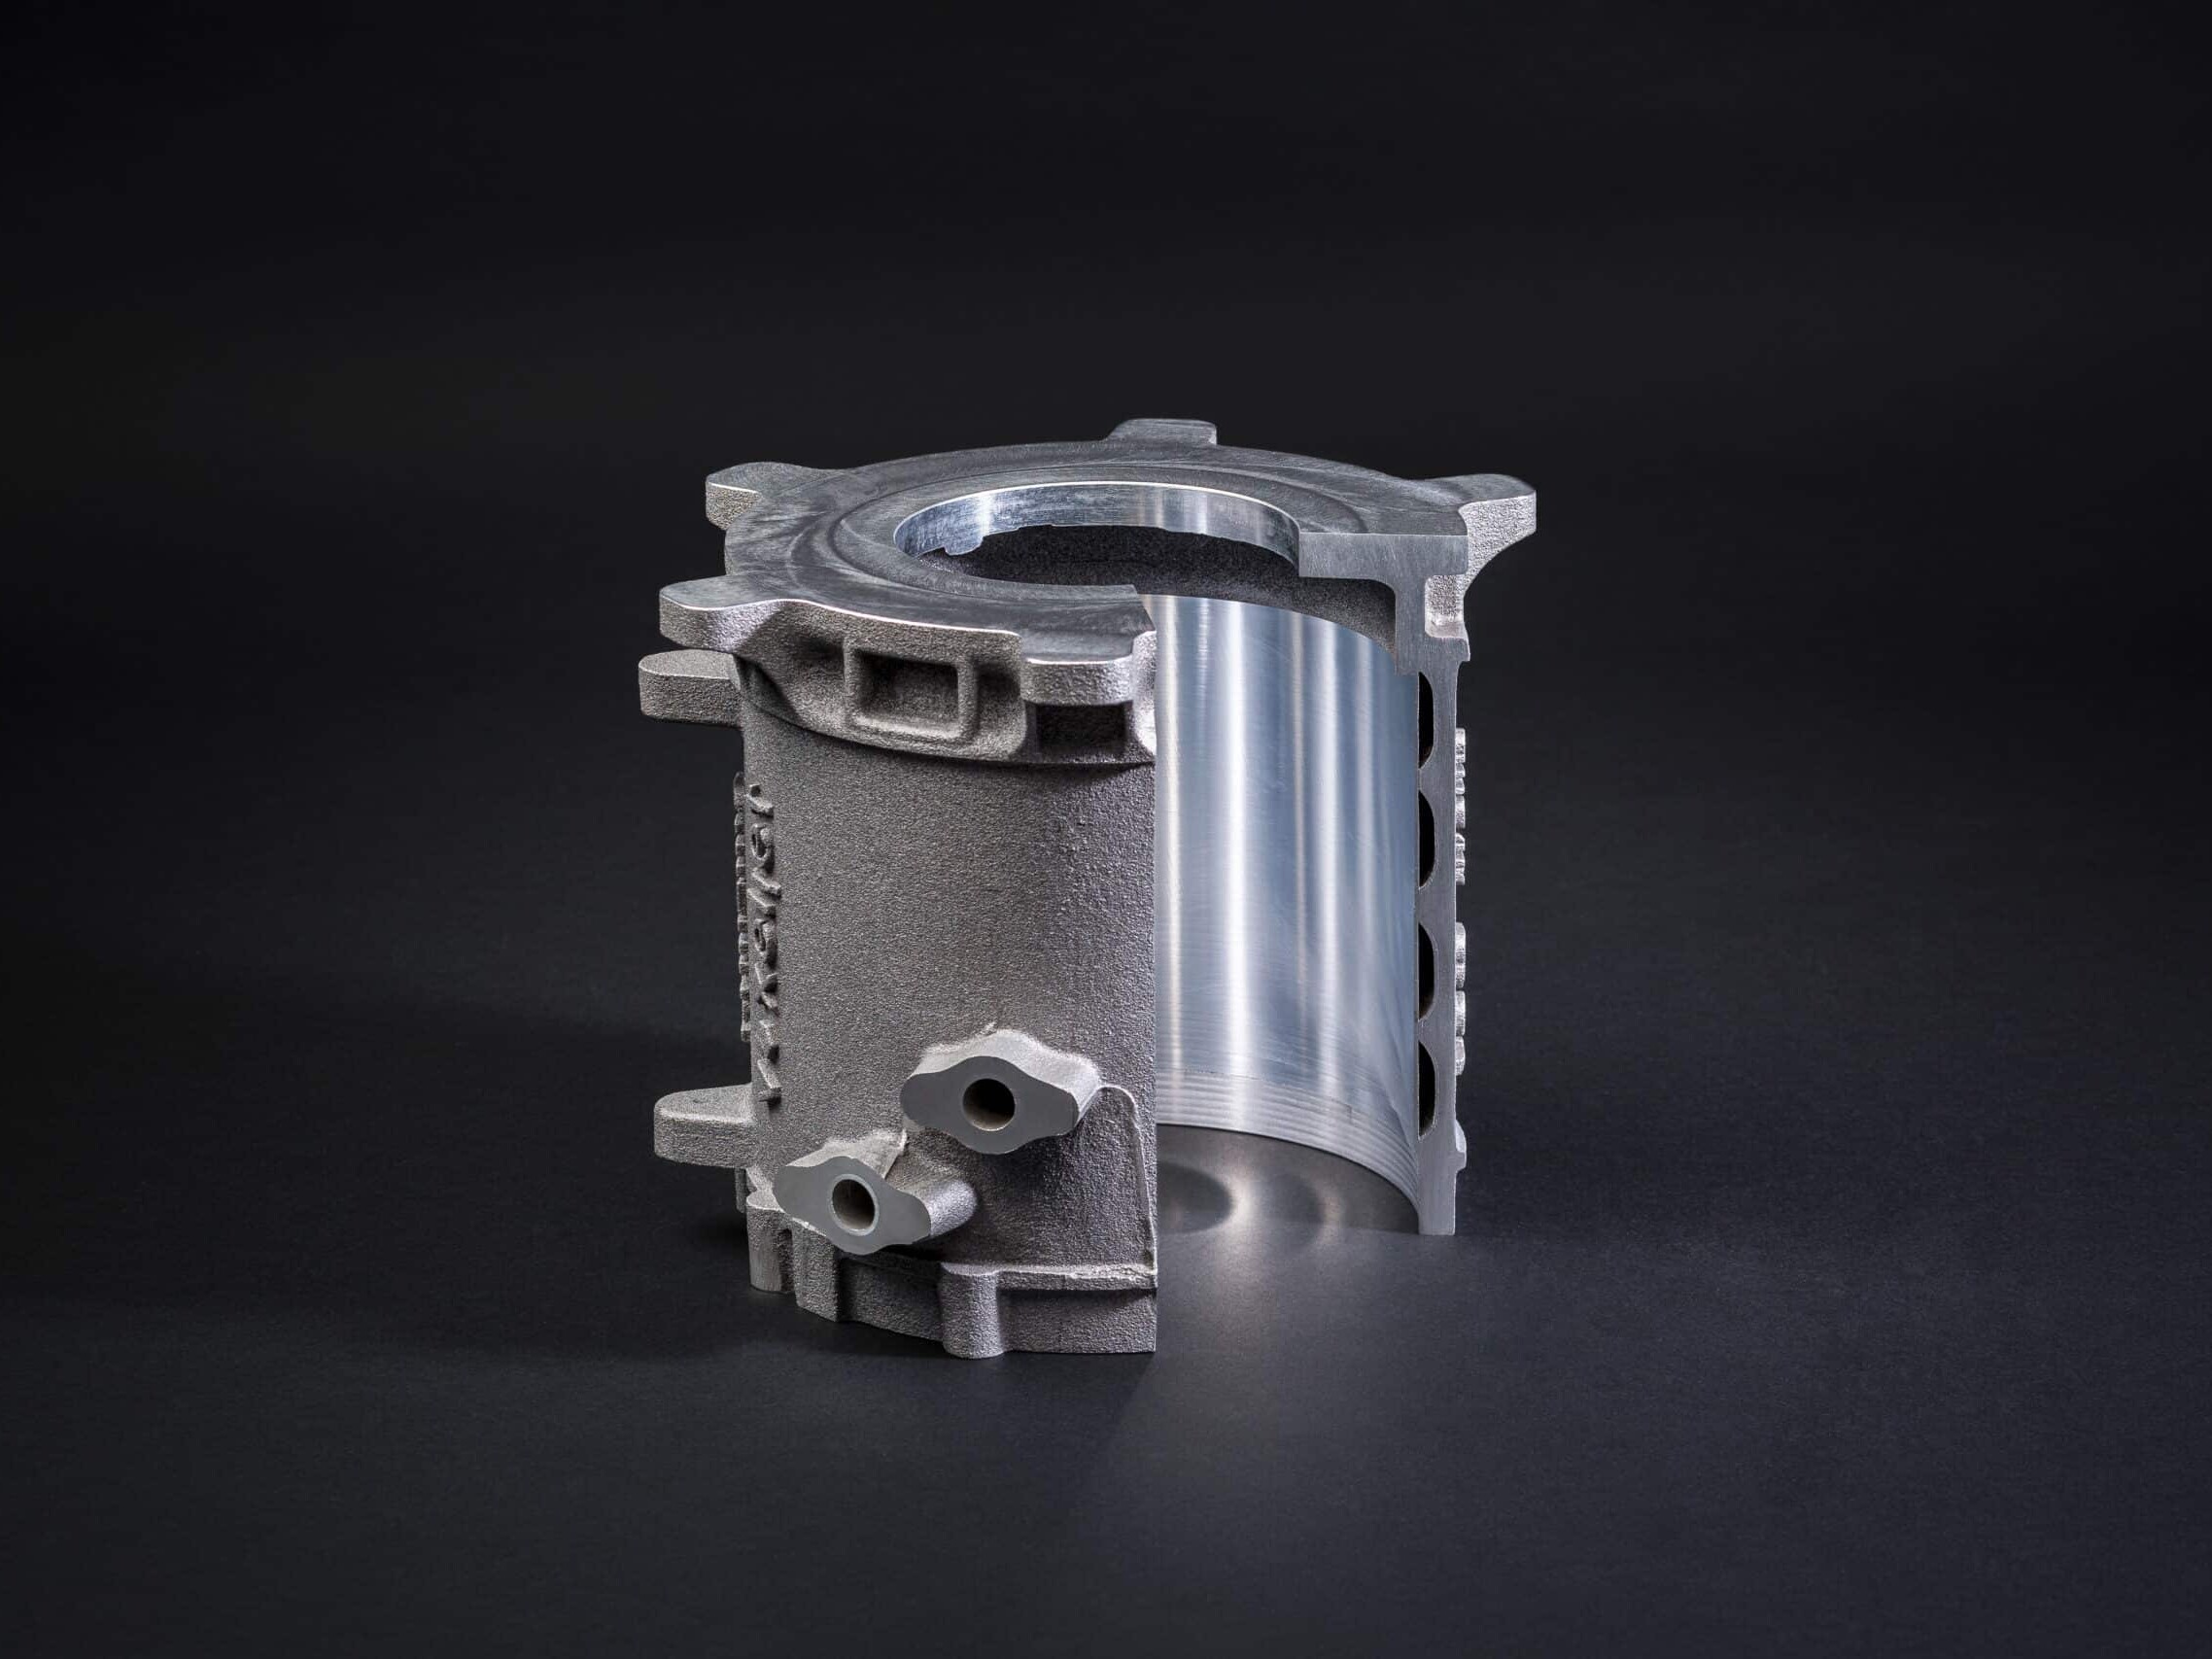 3D printed slip casting pump and mixer. : r/functionalprint